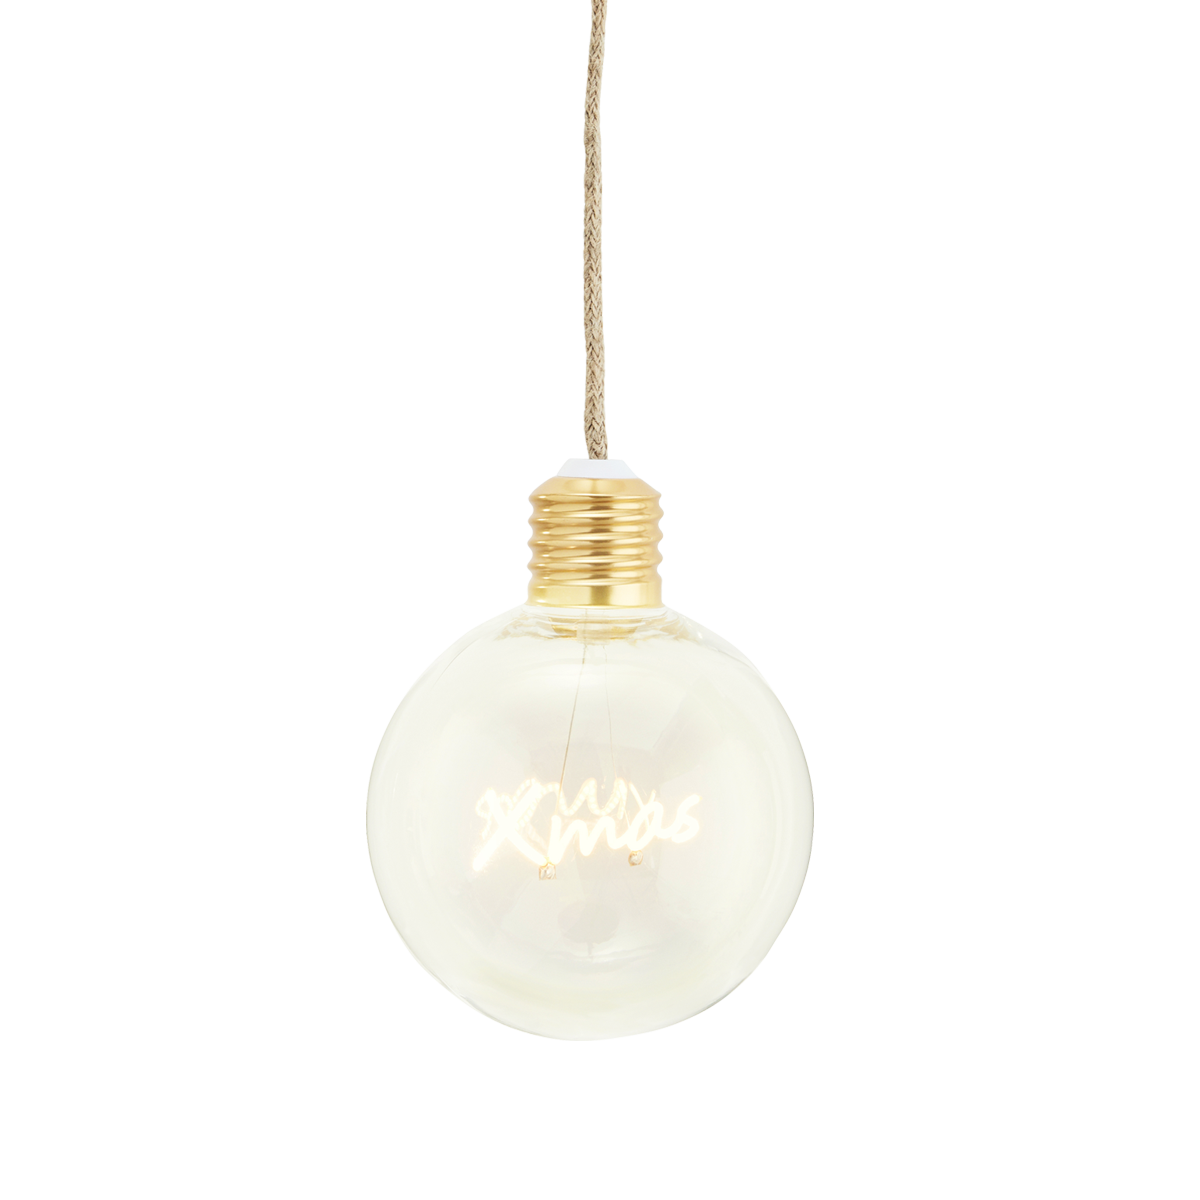 Hanging light bulb w/ filament text